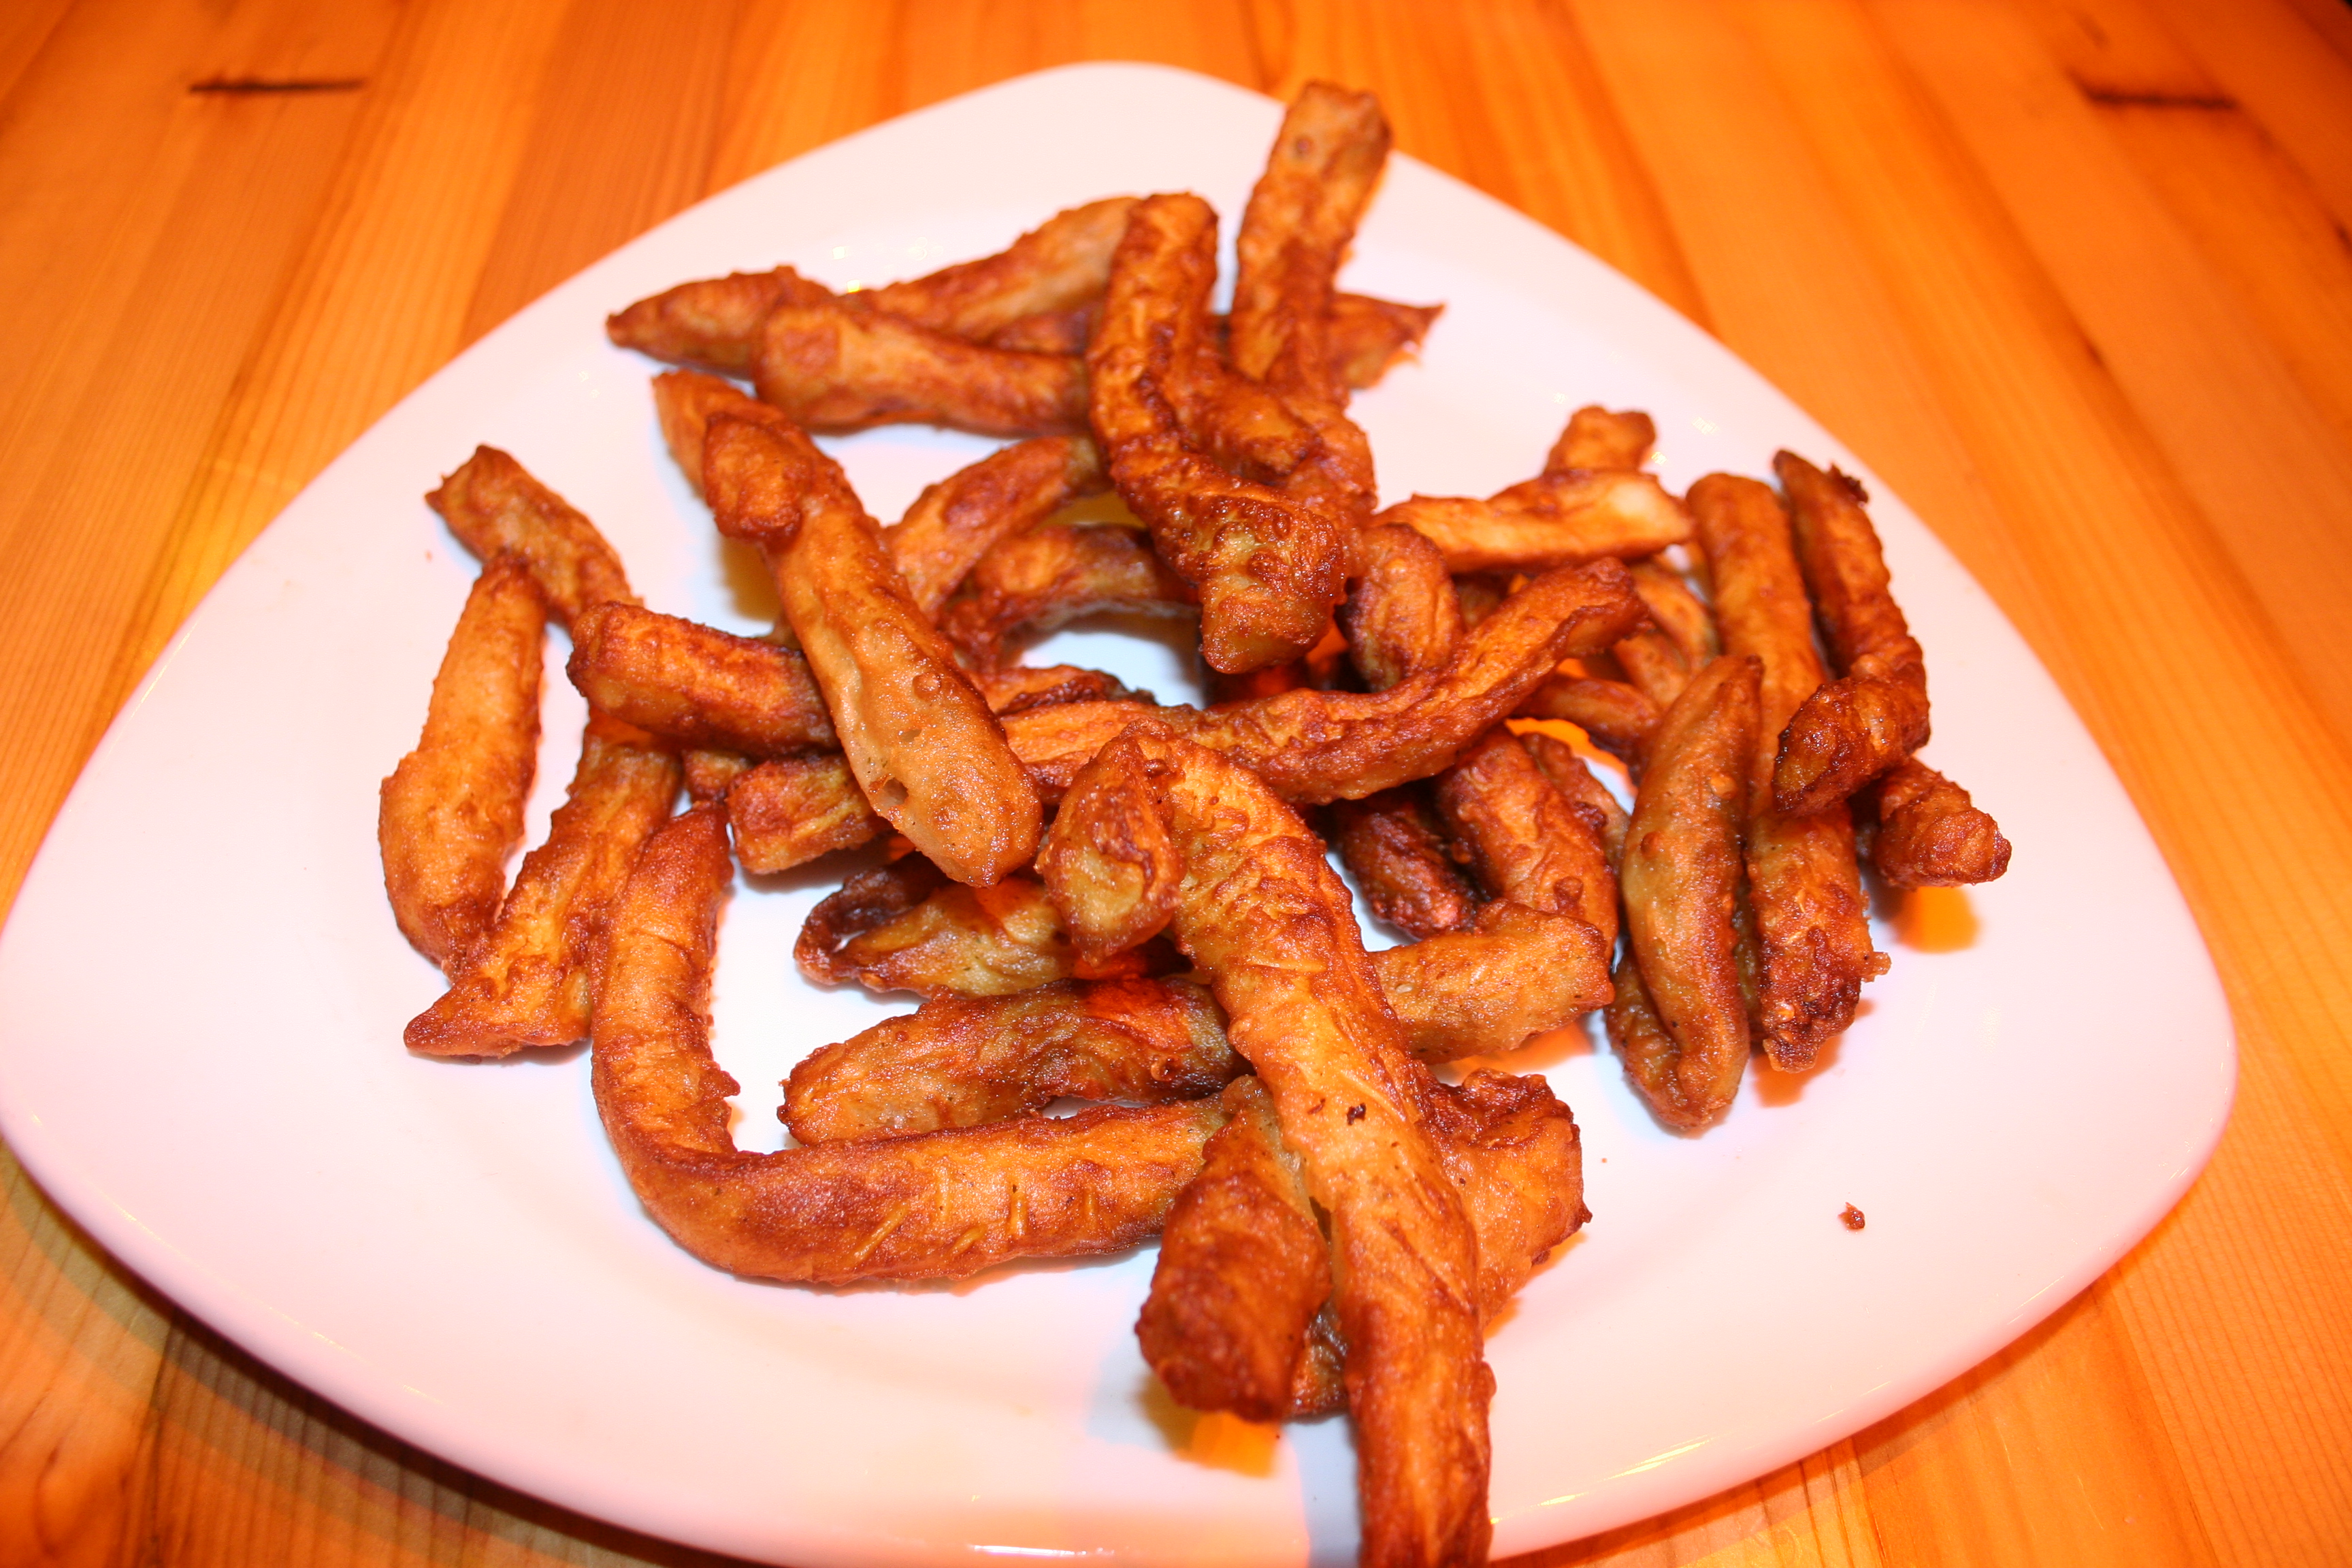 Eggplant fries at TKO Burger are tasty. (Photo: Mark Heckathorn/DC on Heels)